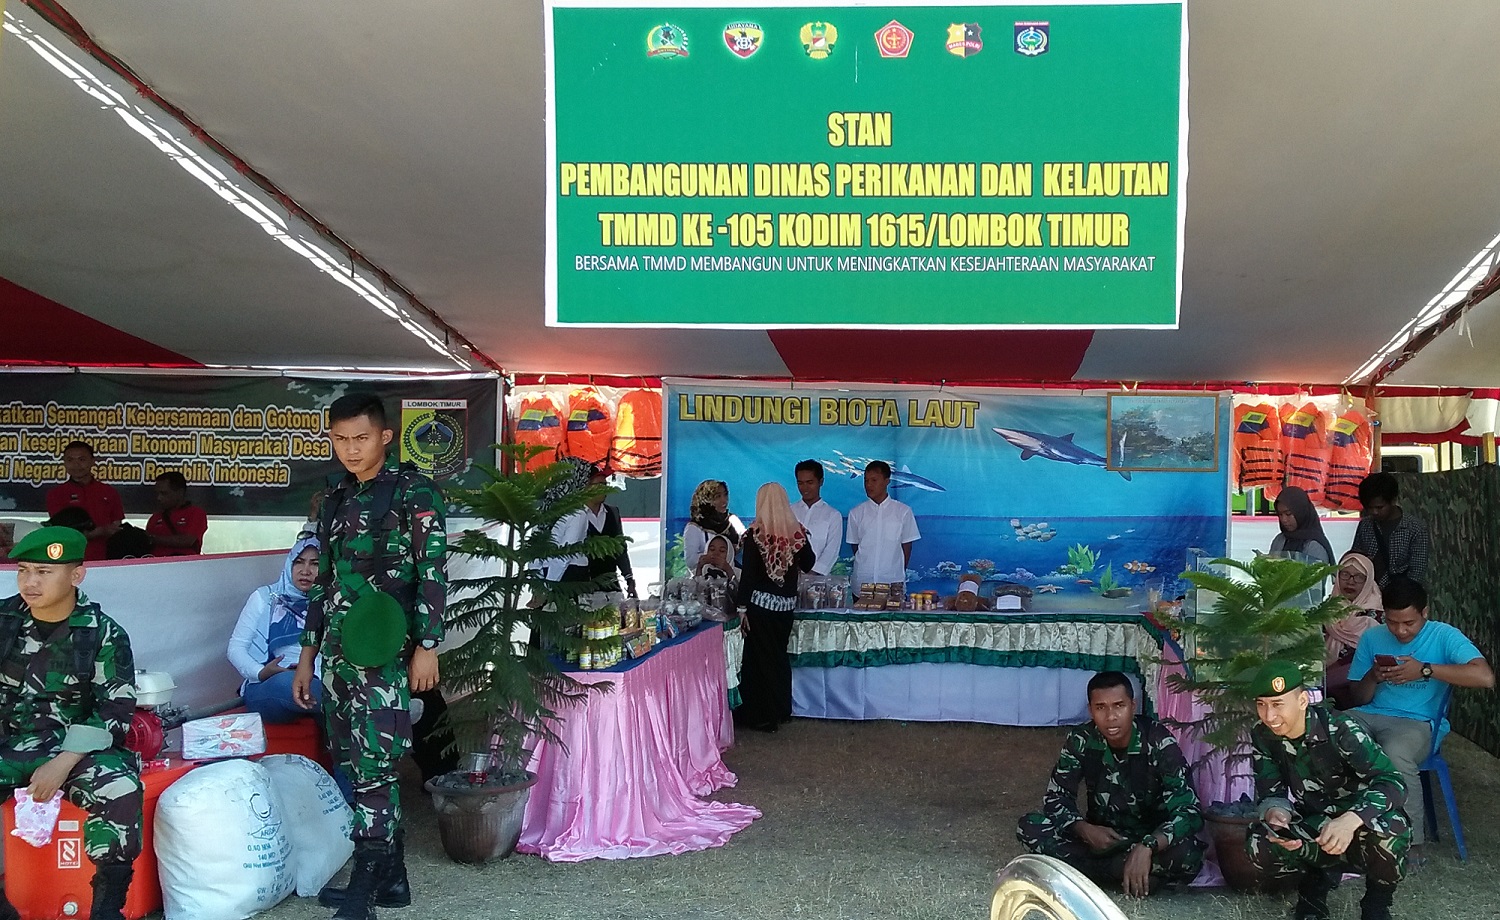 Upacara Penutupan TMMD ke -105 Kodim 1615/Lombok Timur